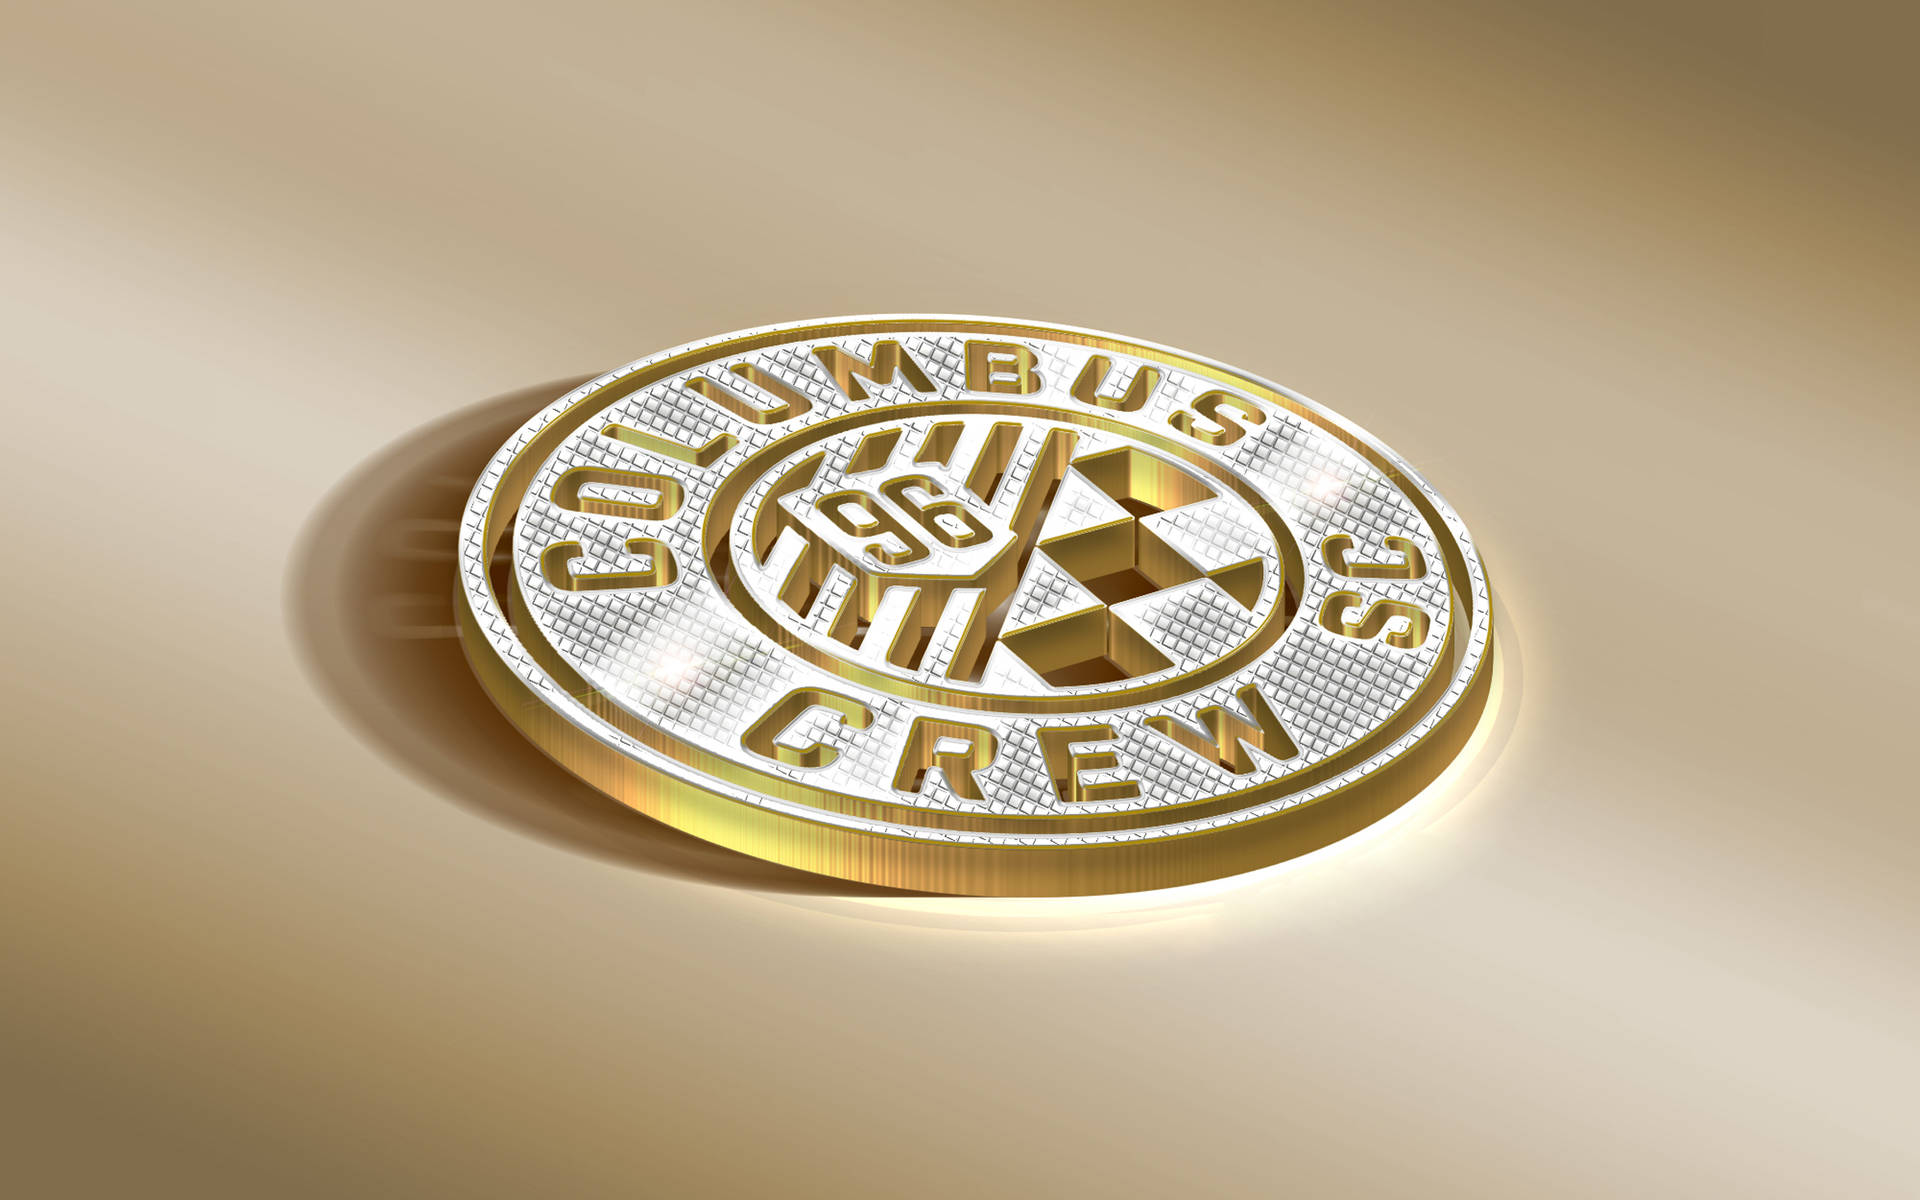 Vibrant Gold and White logo of Columbus Crew Wallpaper